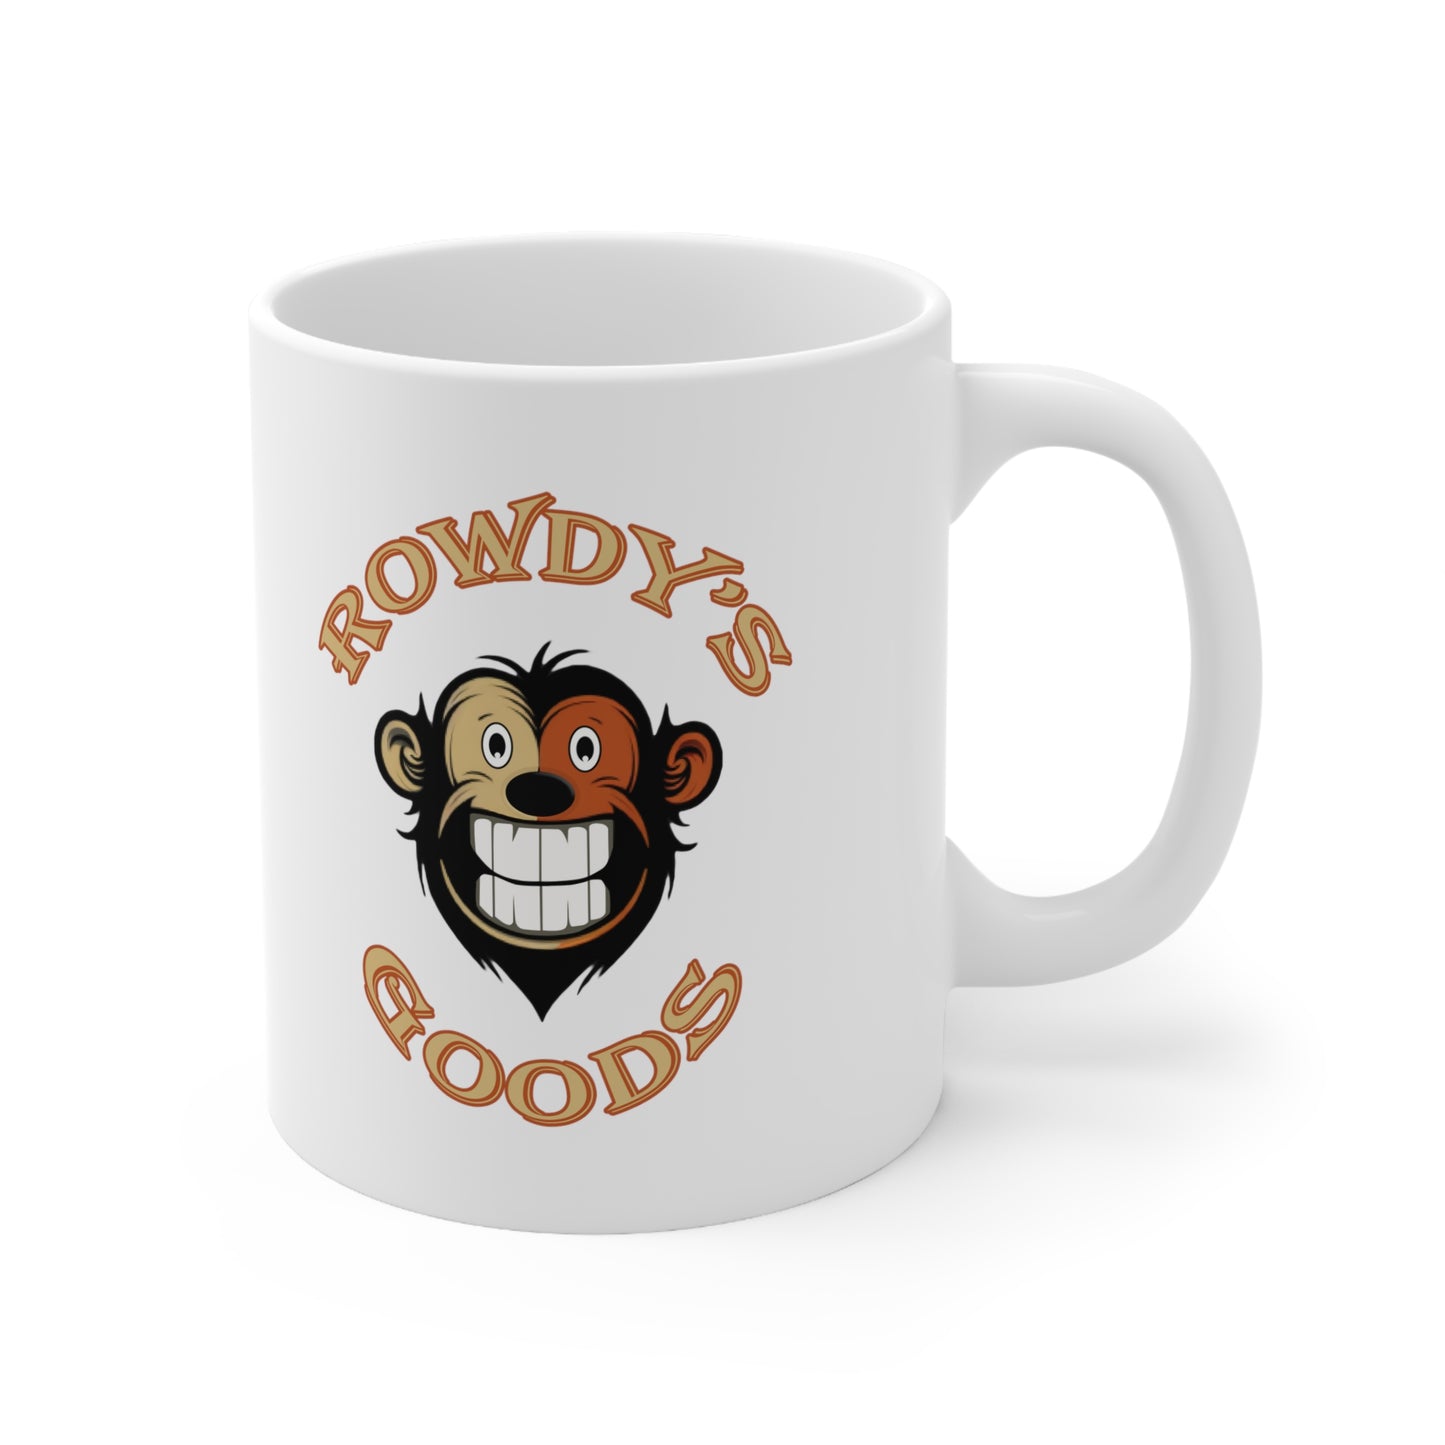 Rowdy's Goods Coffee Mug - Original Rowdy's Logo